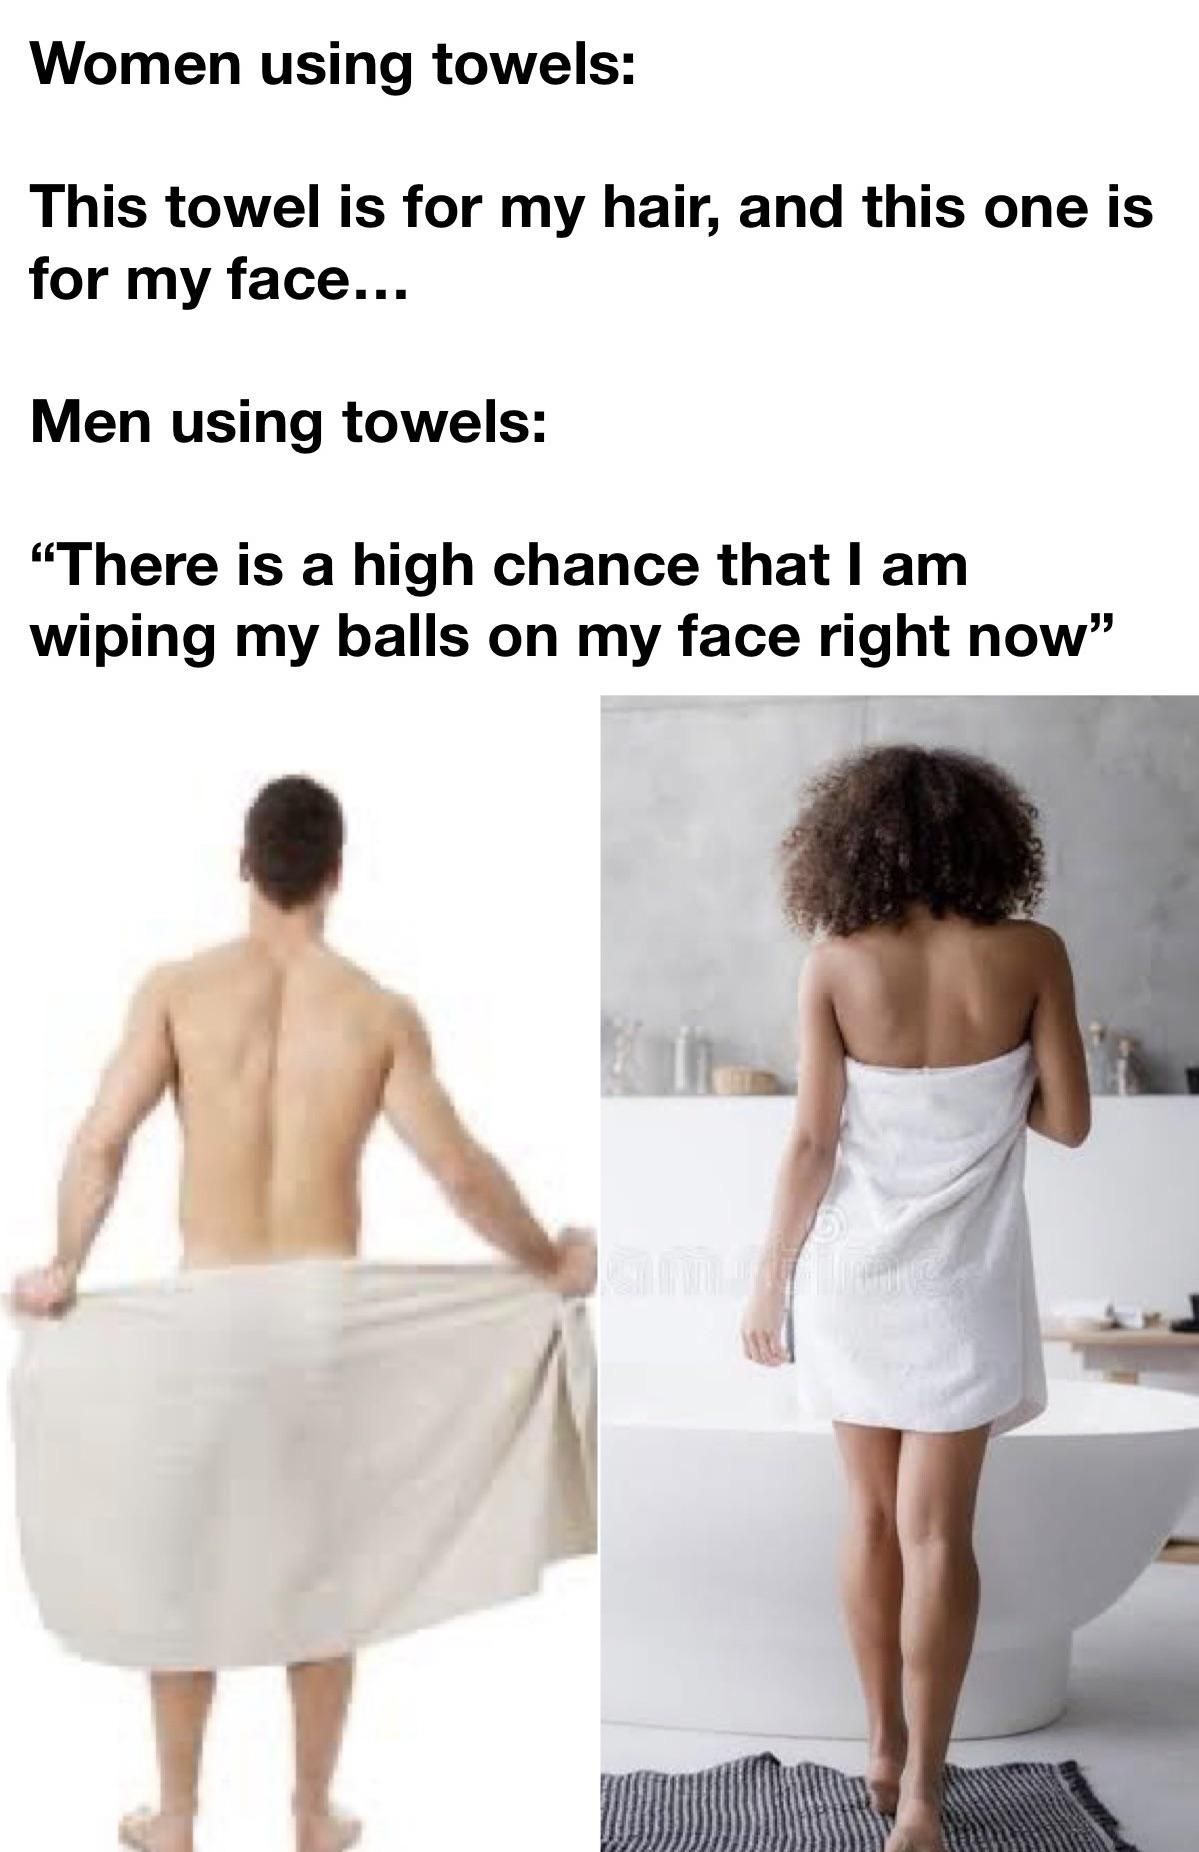 Bro one towel is enough